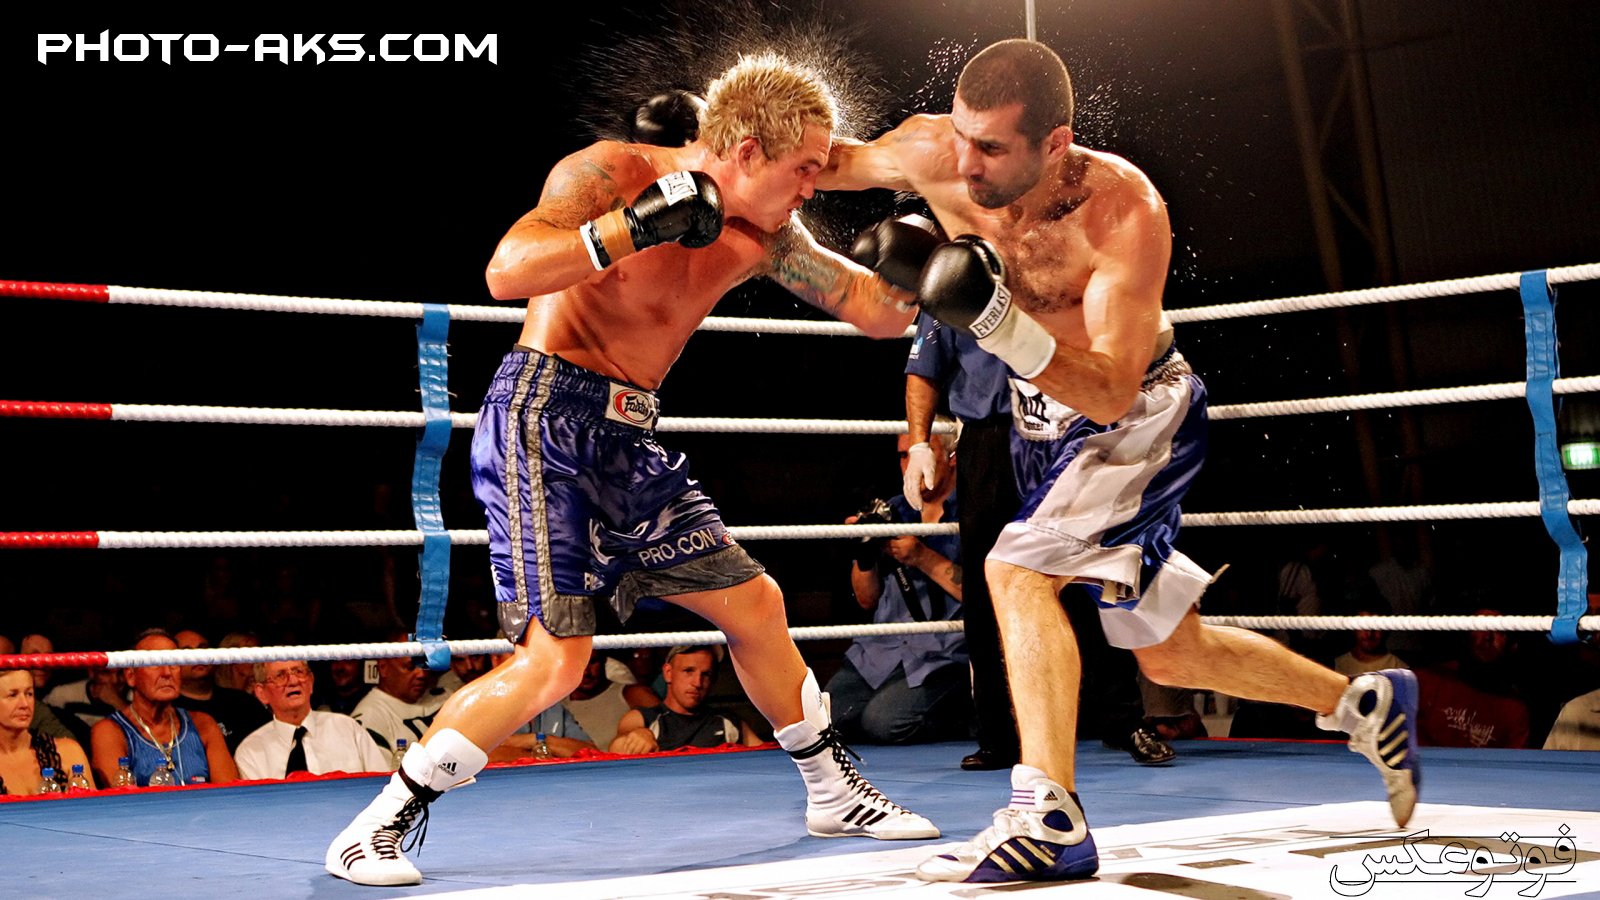 http://pic.photo-aks.com/photo/sports/combat/large/on-boxing-ring.jpg